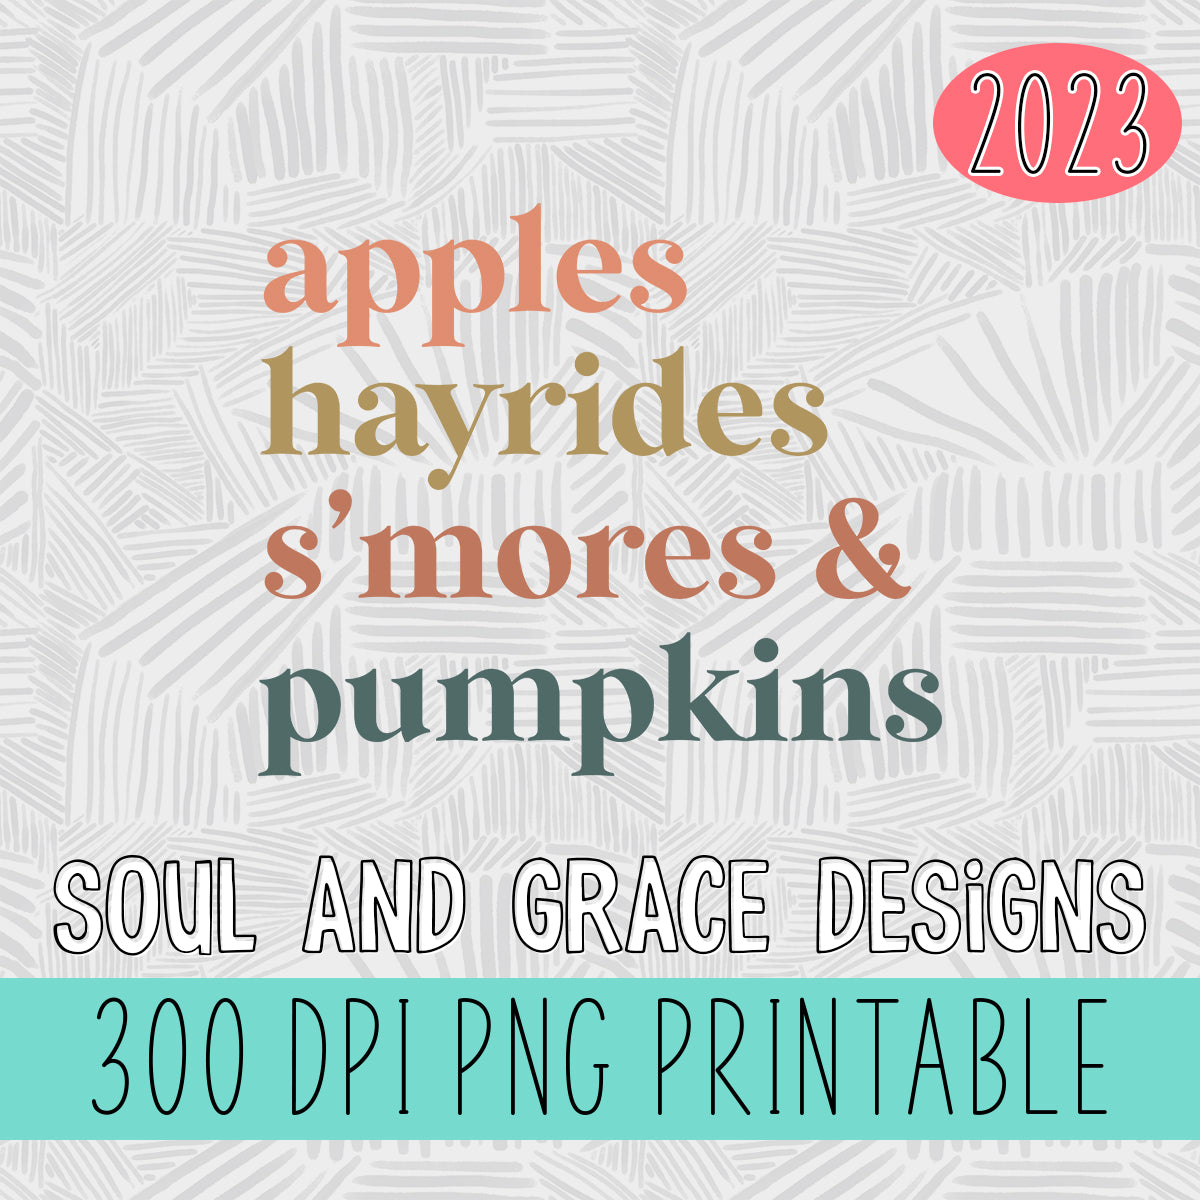 Apples Hayrides S'mores & Pumpkins